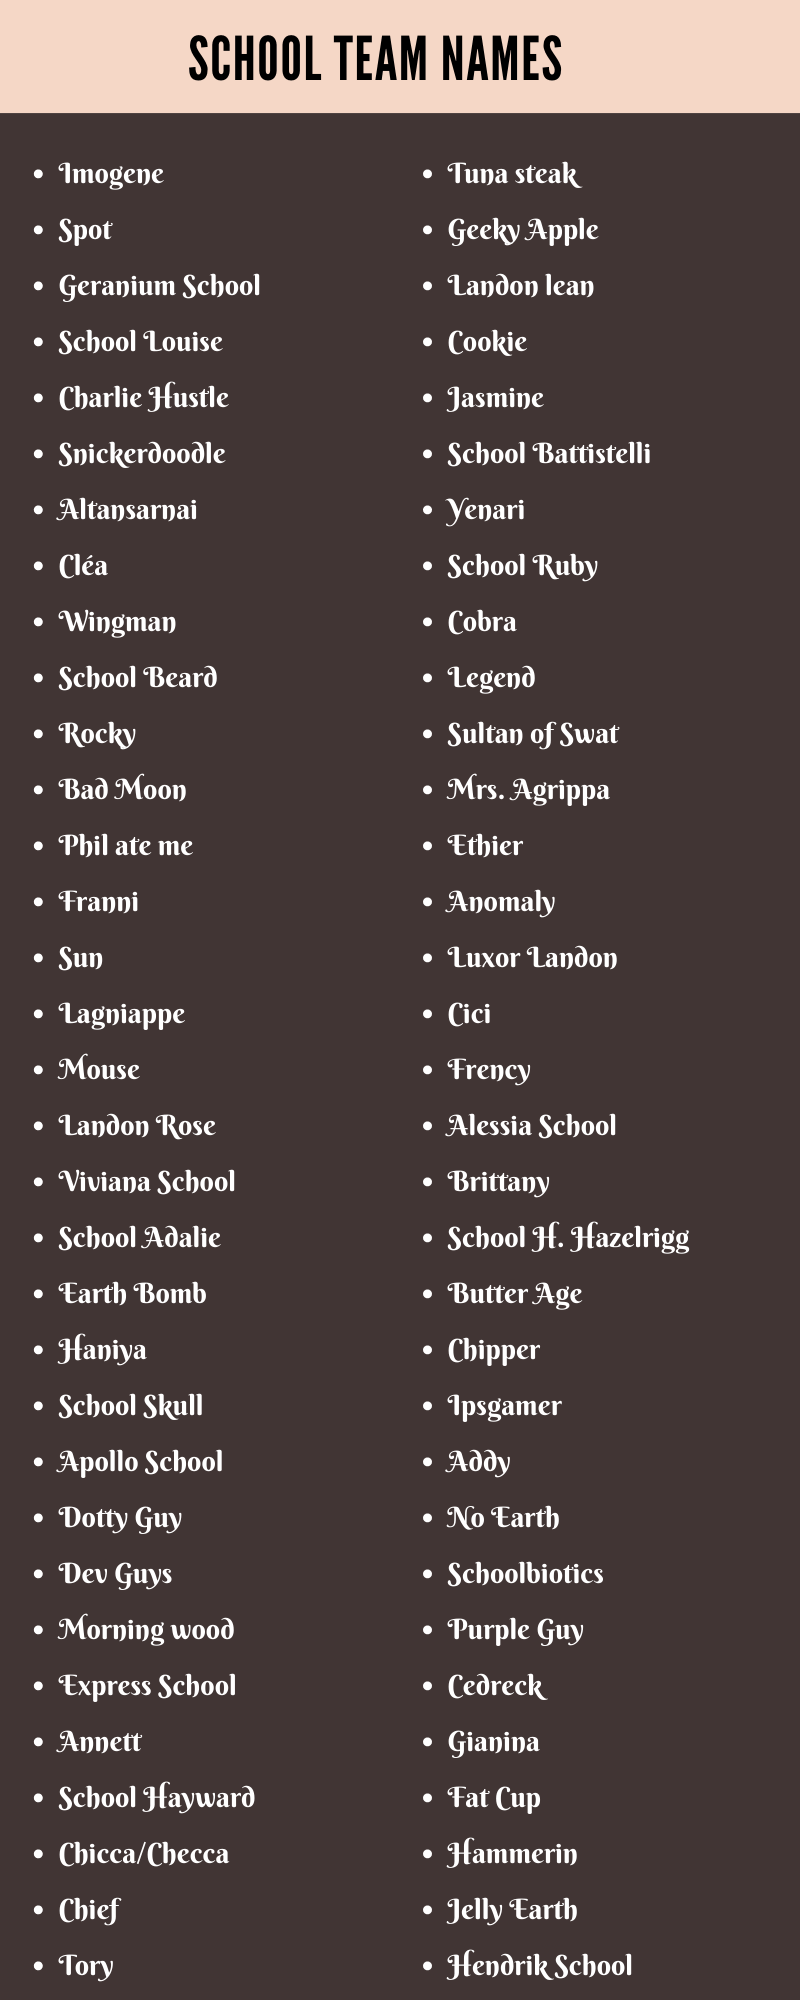 School Team Names